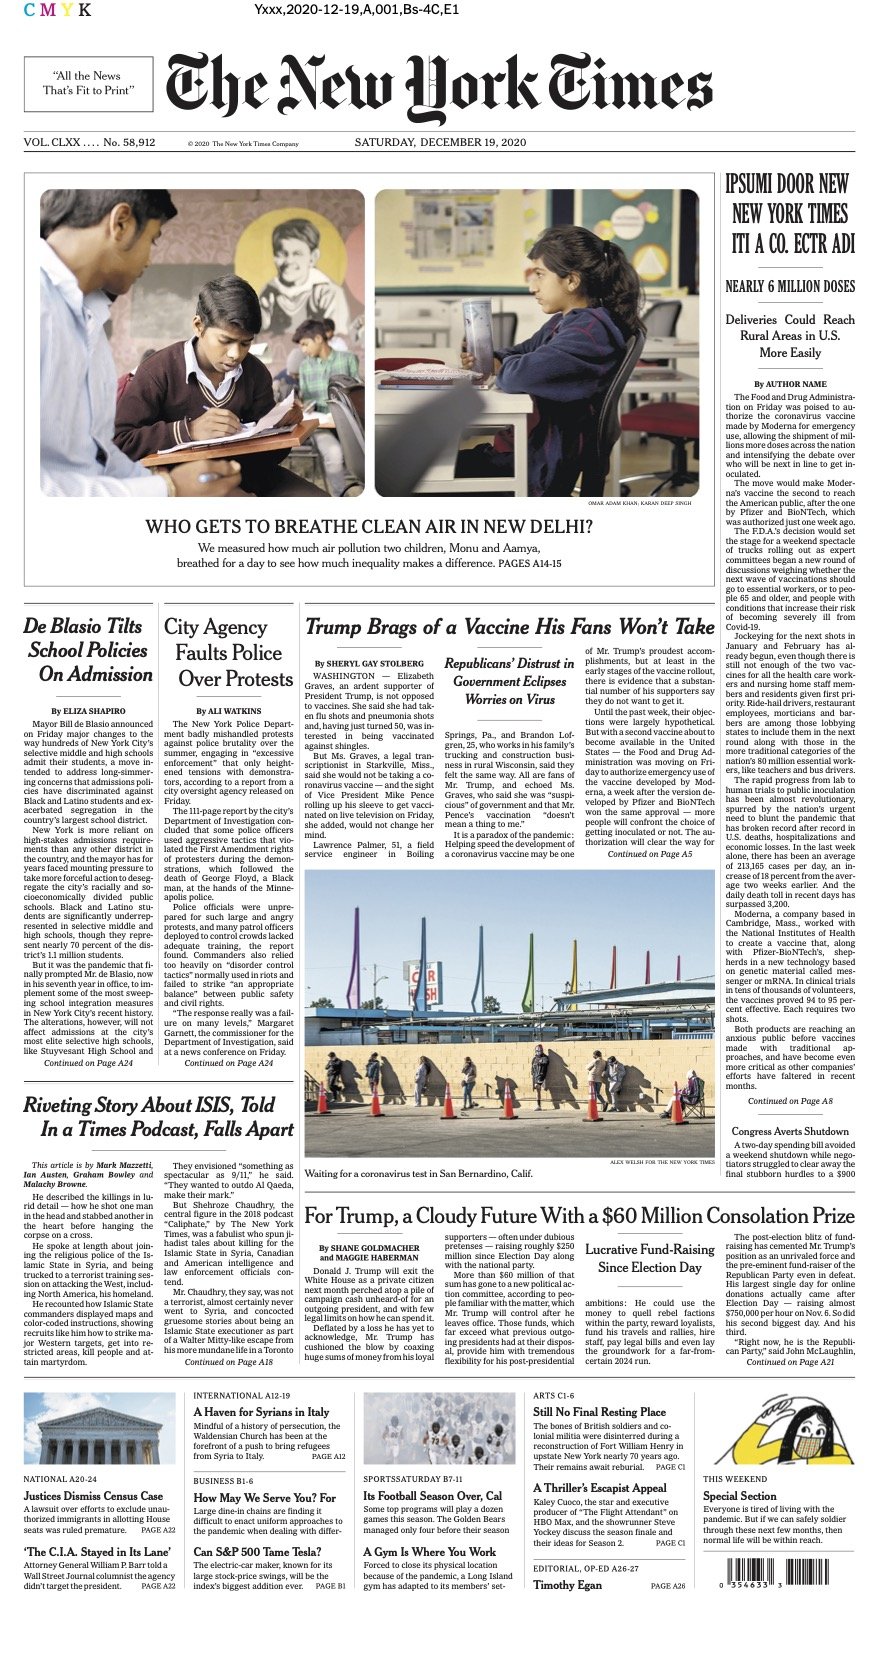 1 A1, NYTimes 12-19-2020, National 1 - NewsDesk.jpg